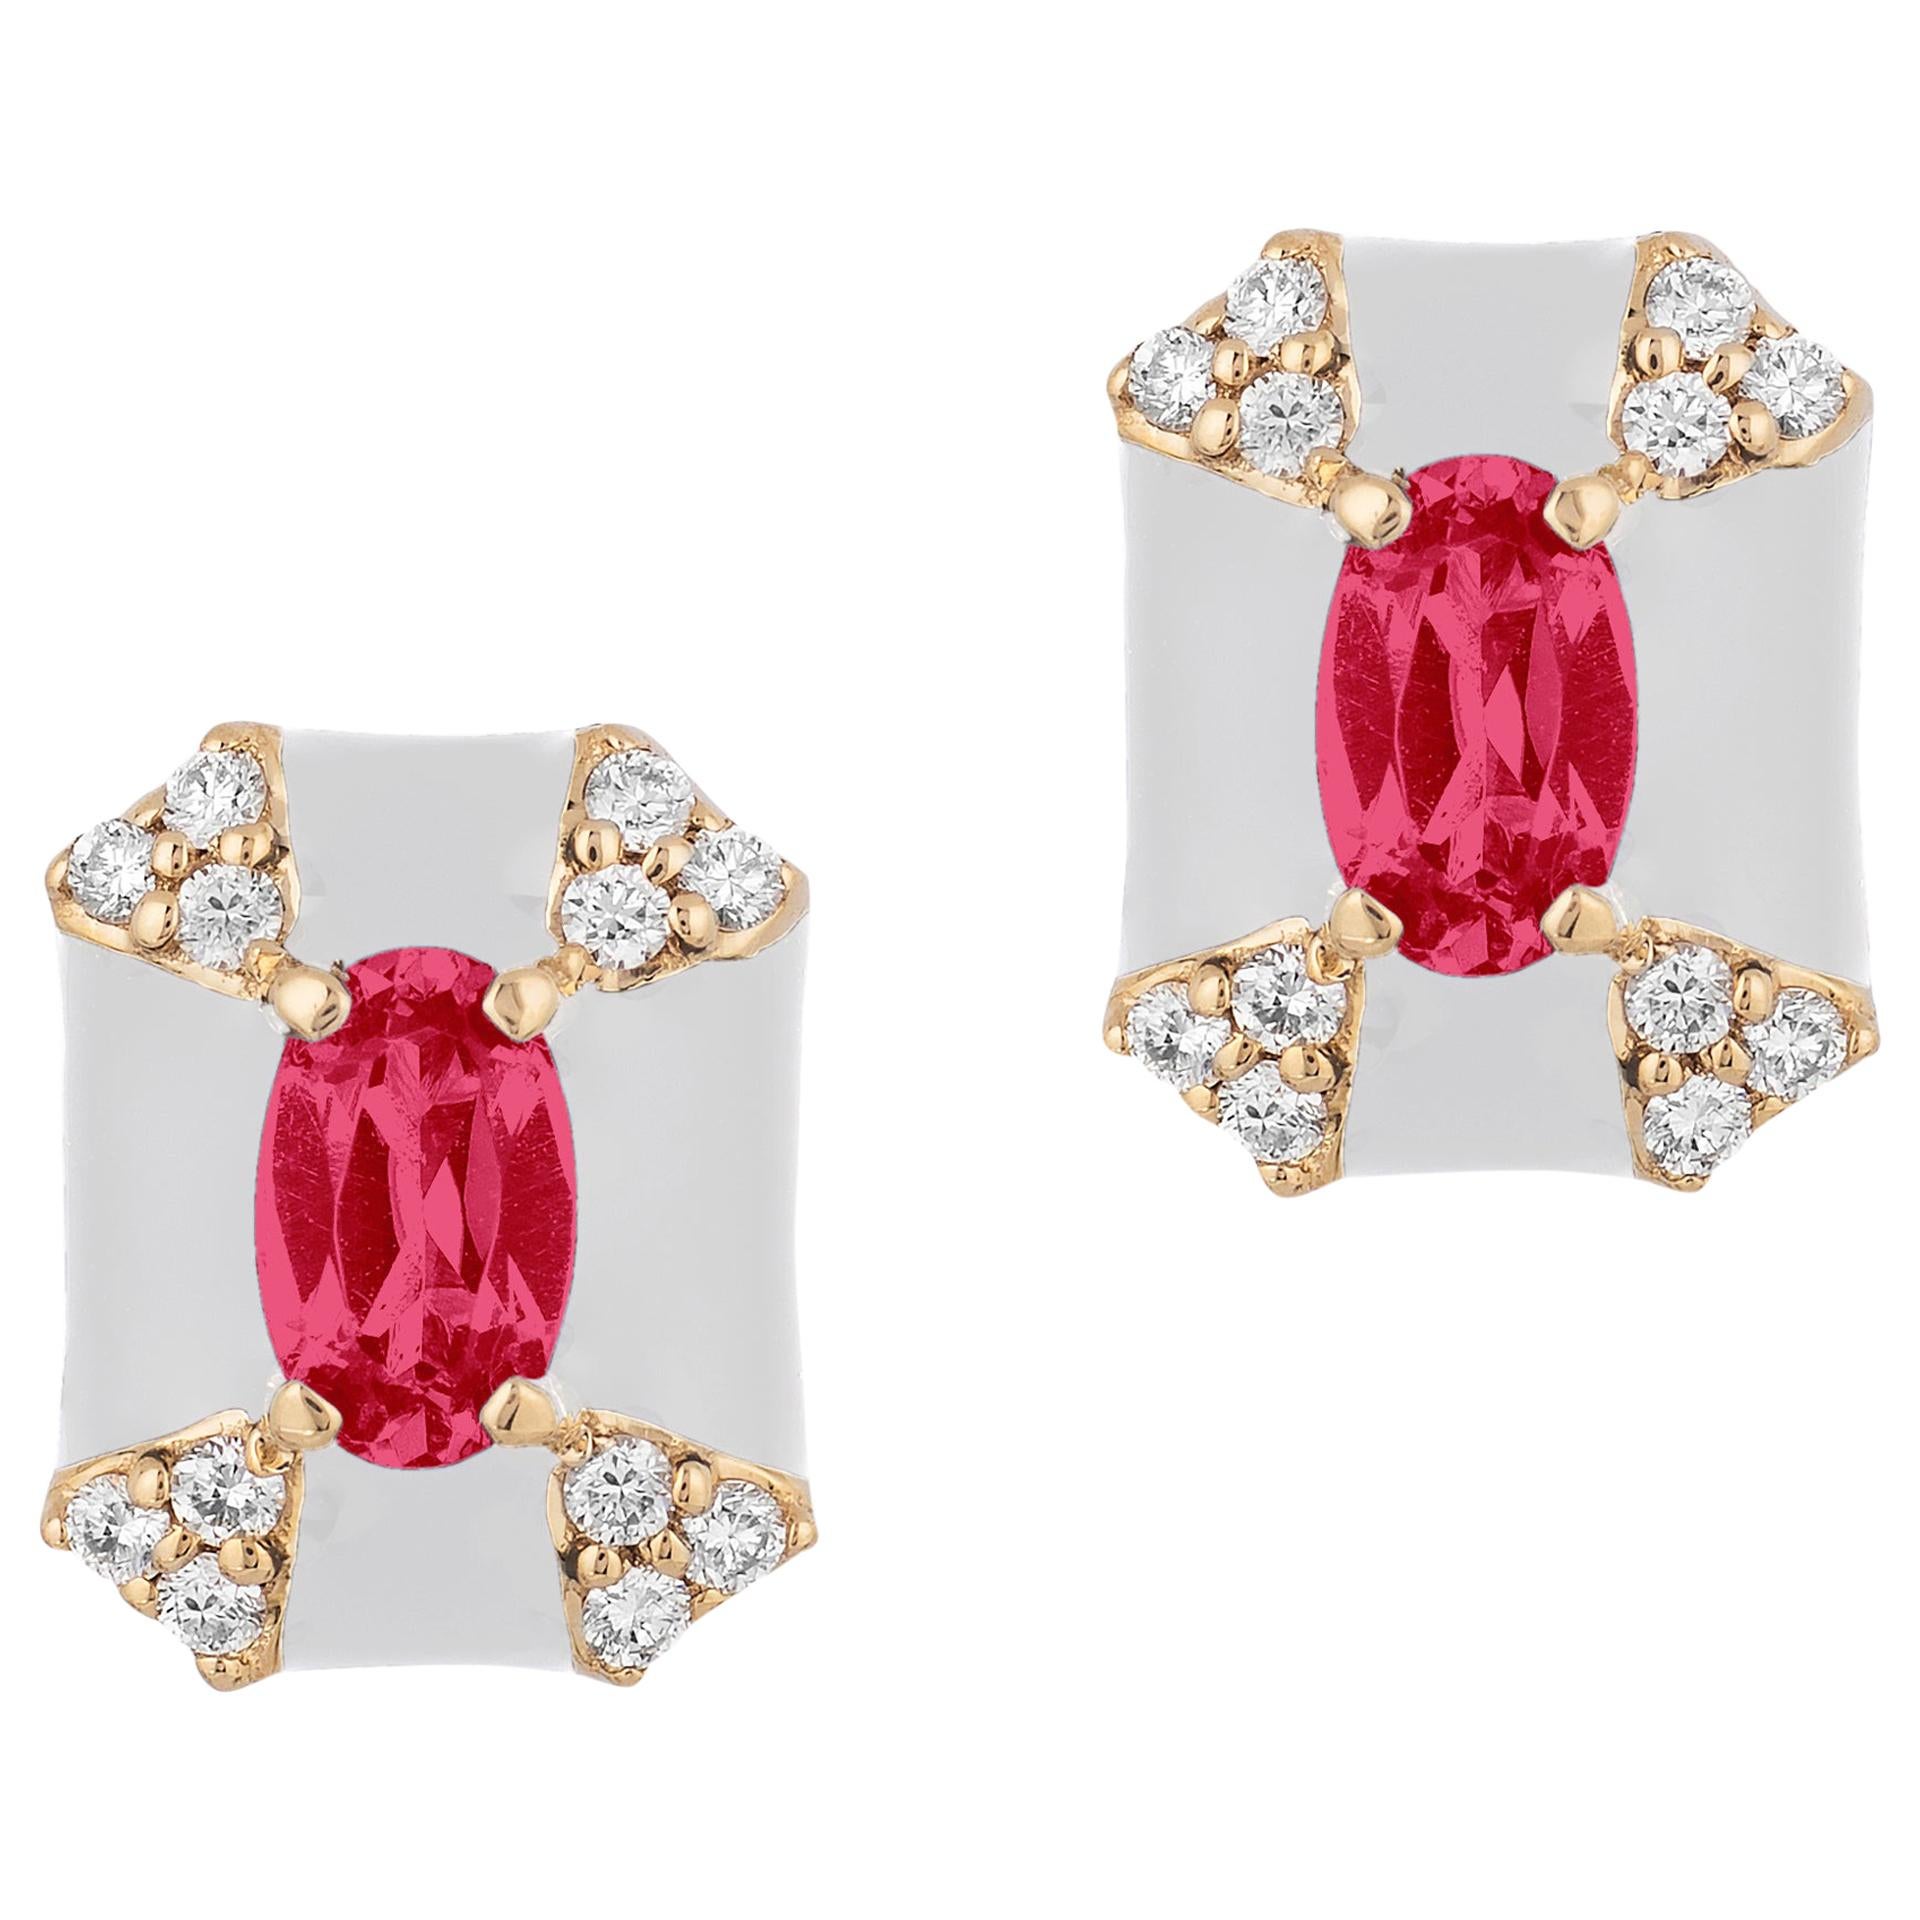 Goshwara Octagon White Enamel with Ruby and Diamonds Stud Earrings